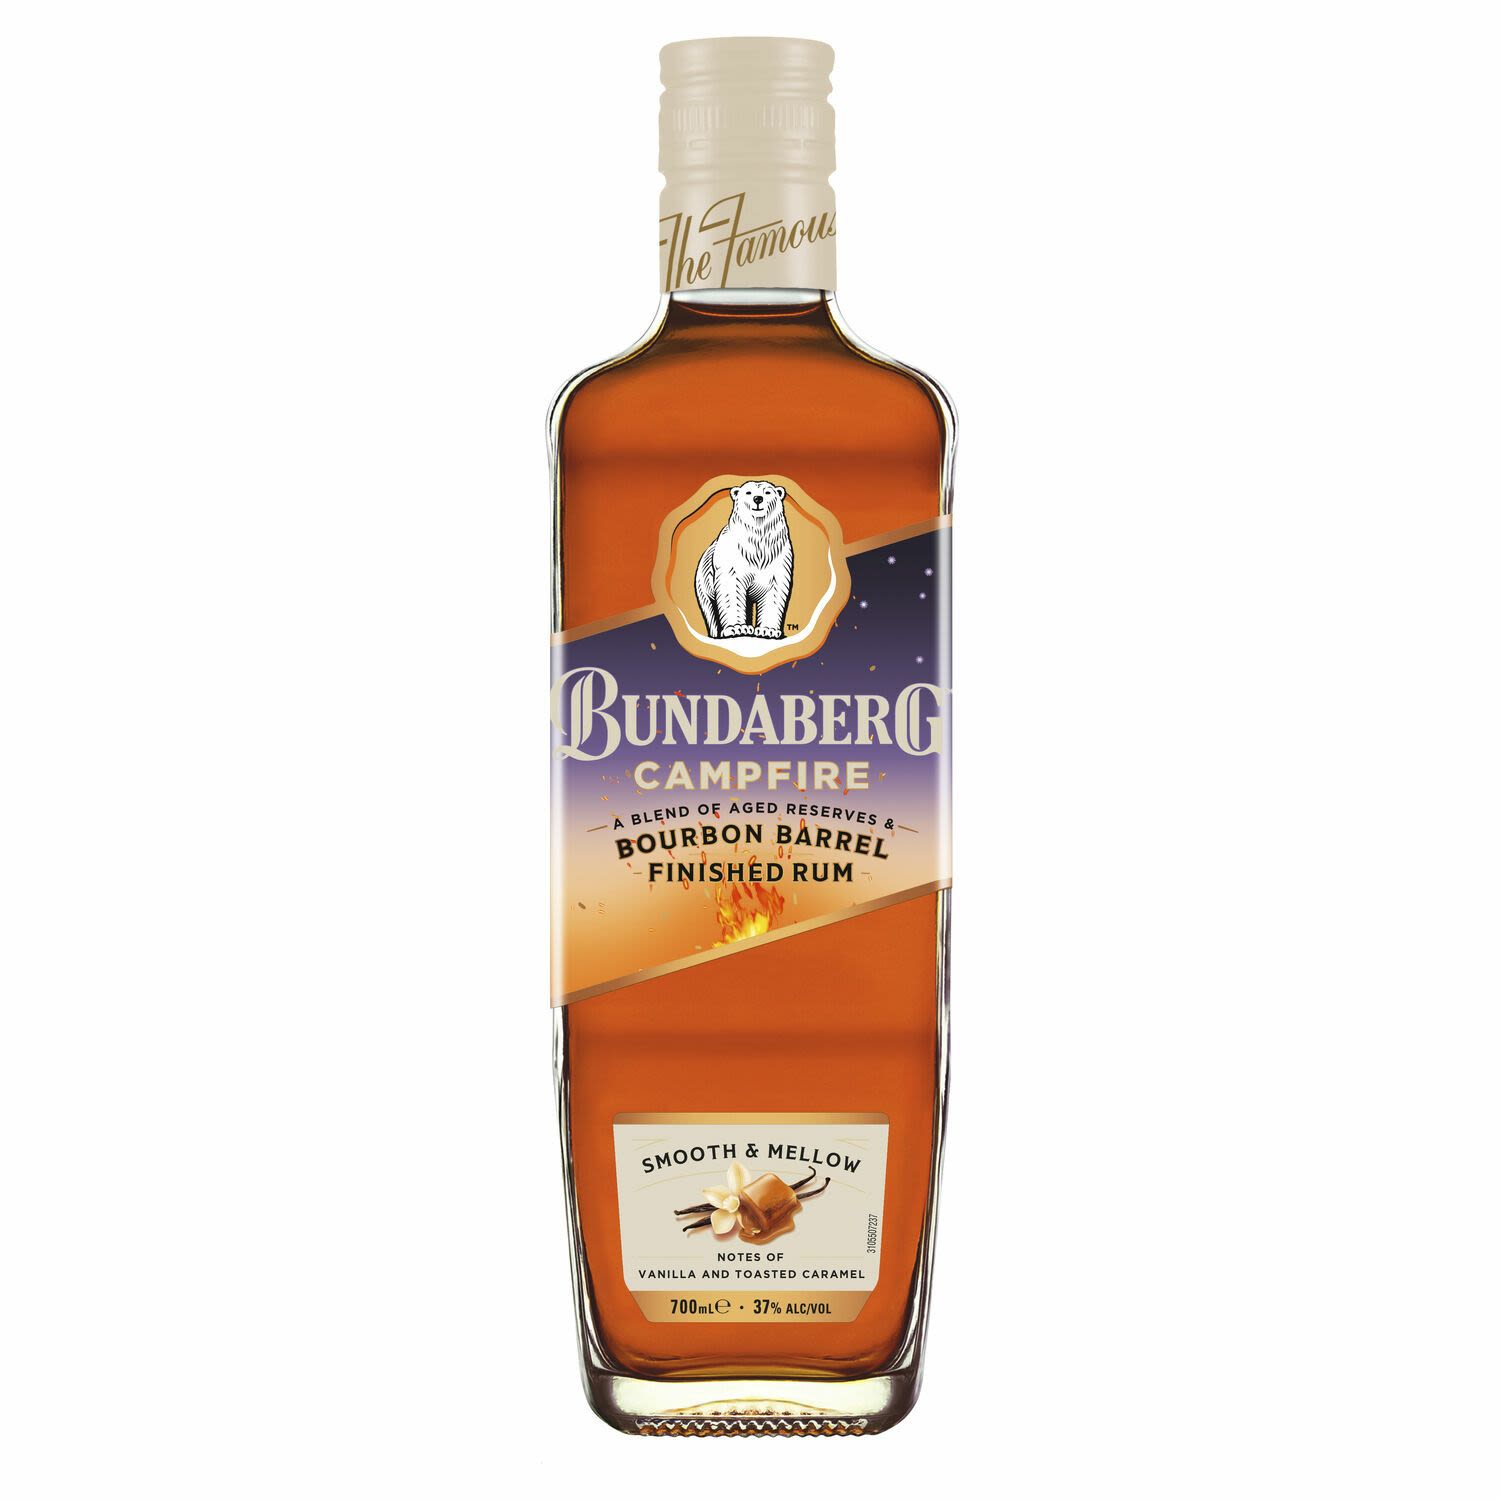 Bundaberg Campfire Bourbon Barrel Rum 37% 700mL Bottle